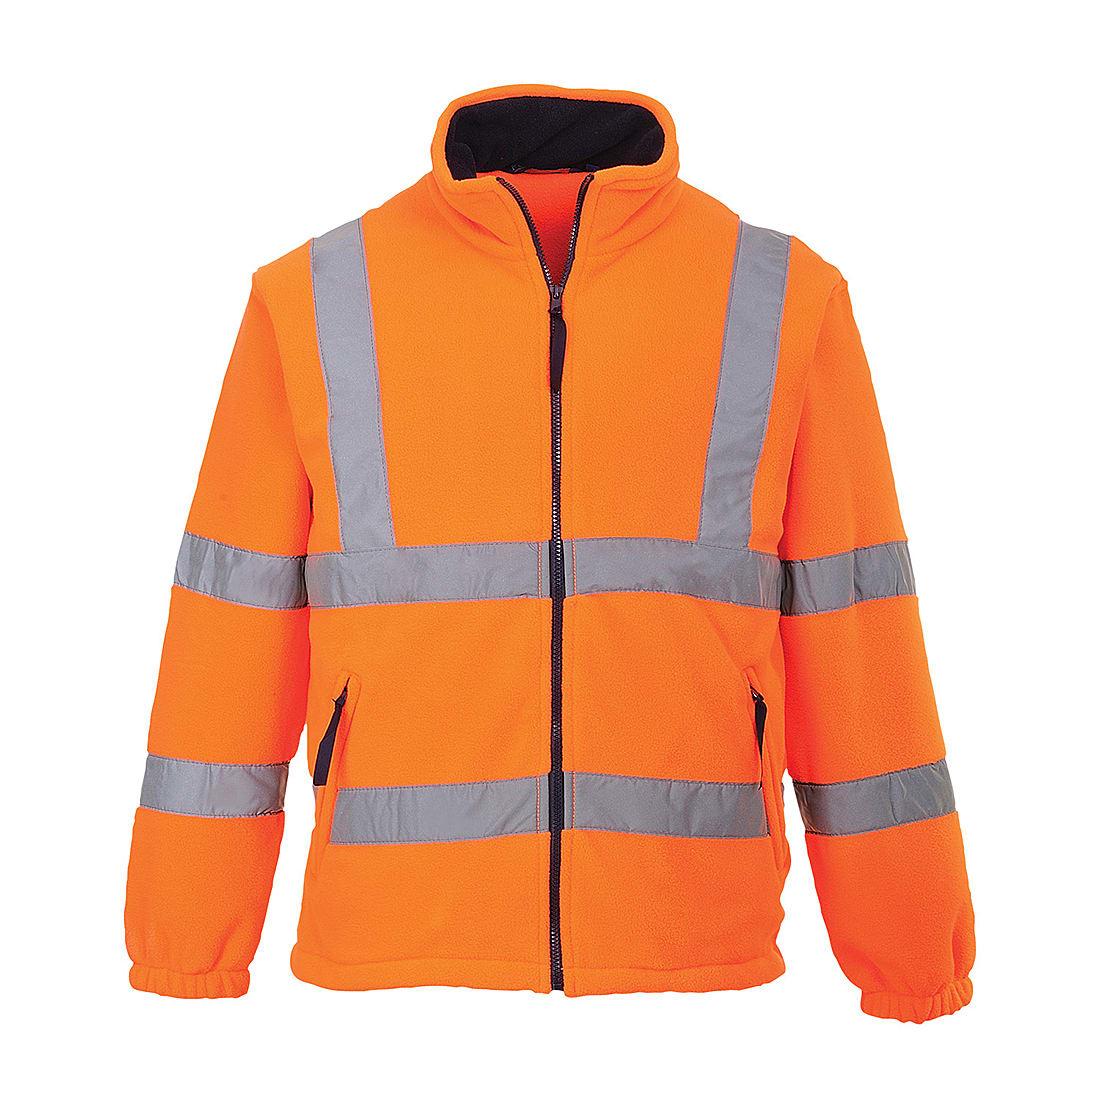 Portwest Hi-Viz Mesh Lined Fleece Jacket in Orange (Product Code: F300)